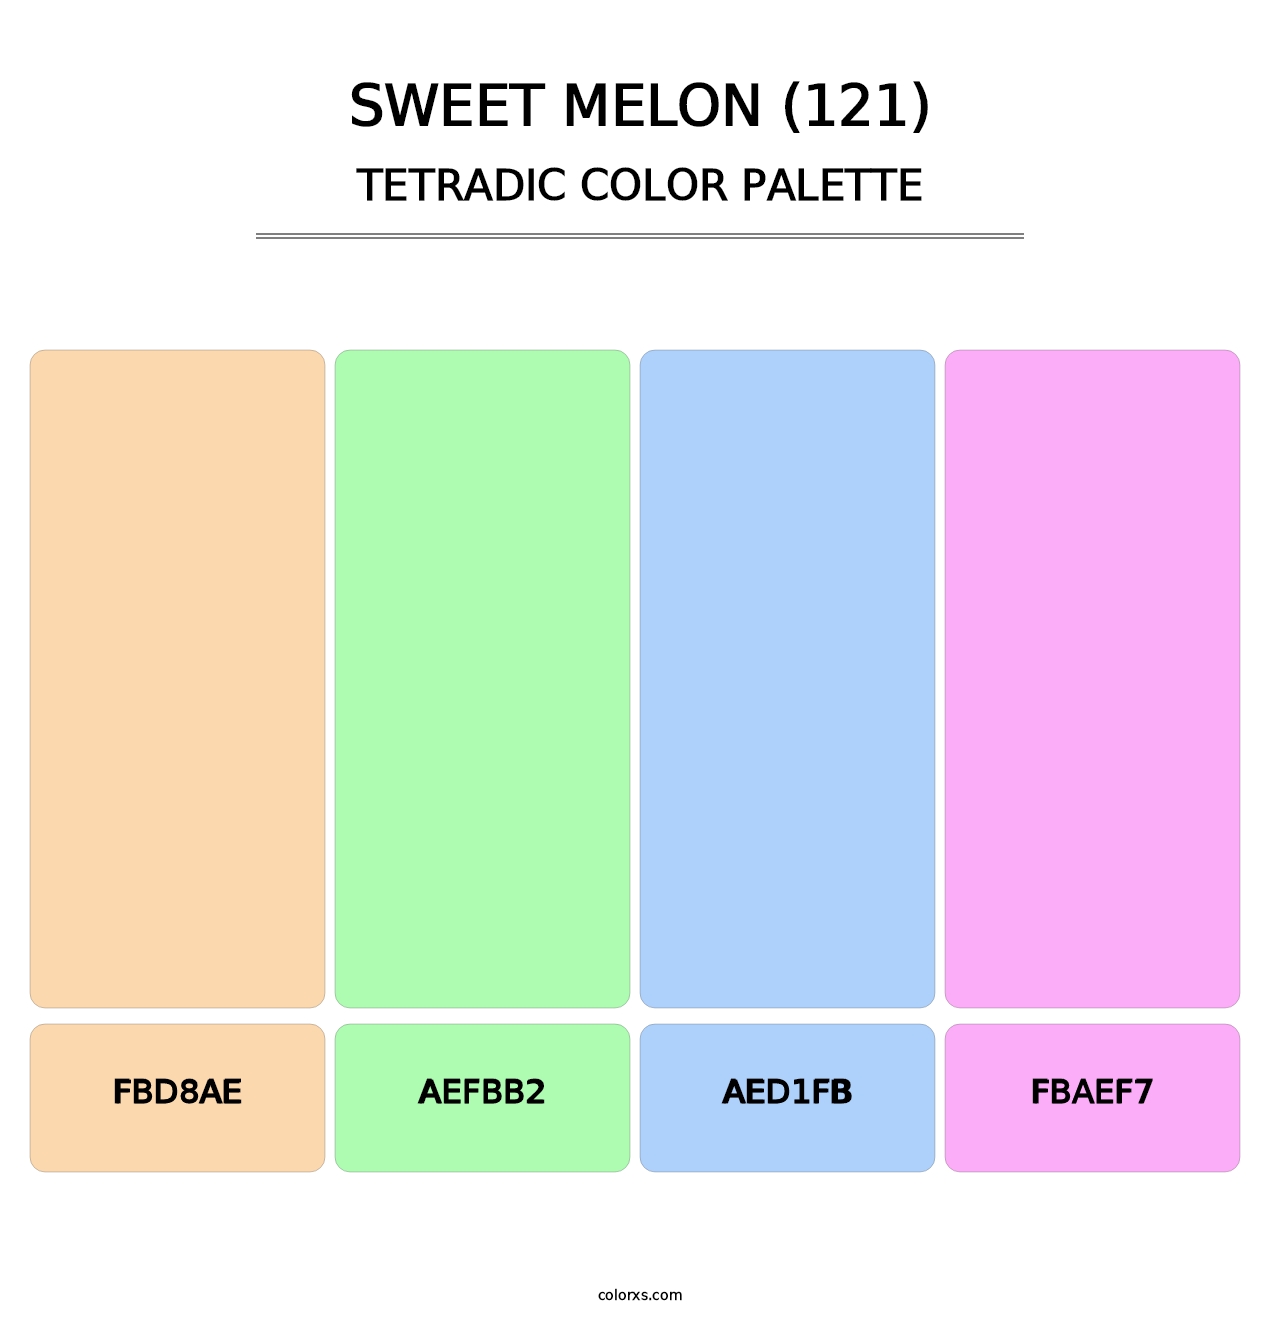 Sweet Melon (121) - Tetradic Color Palette